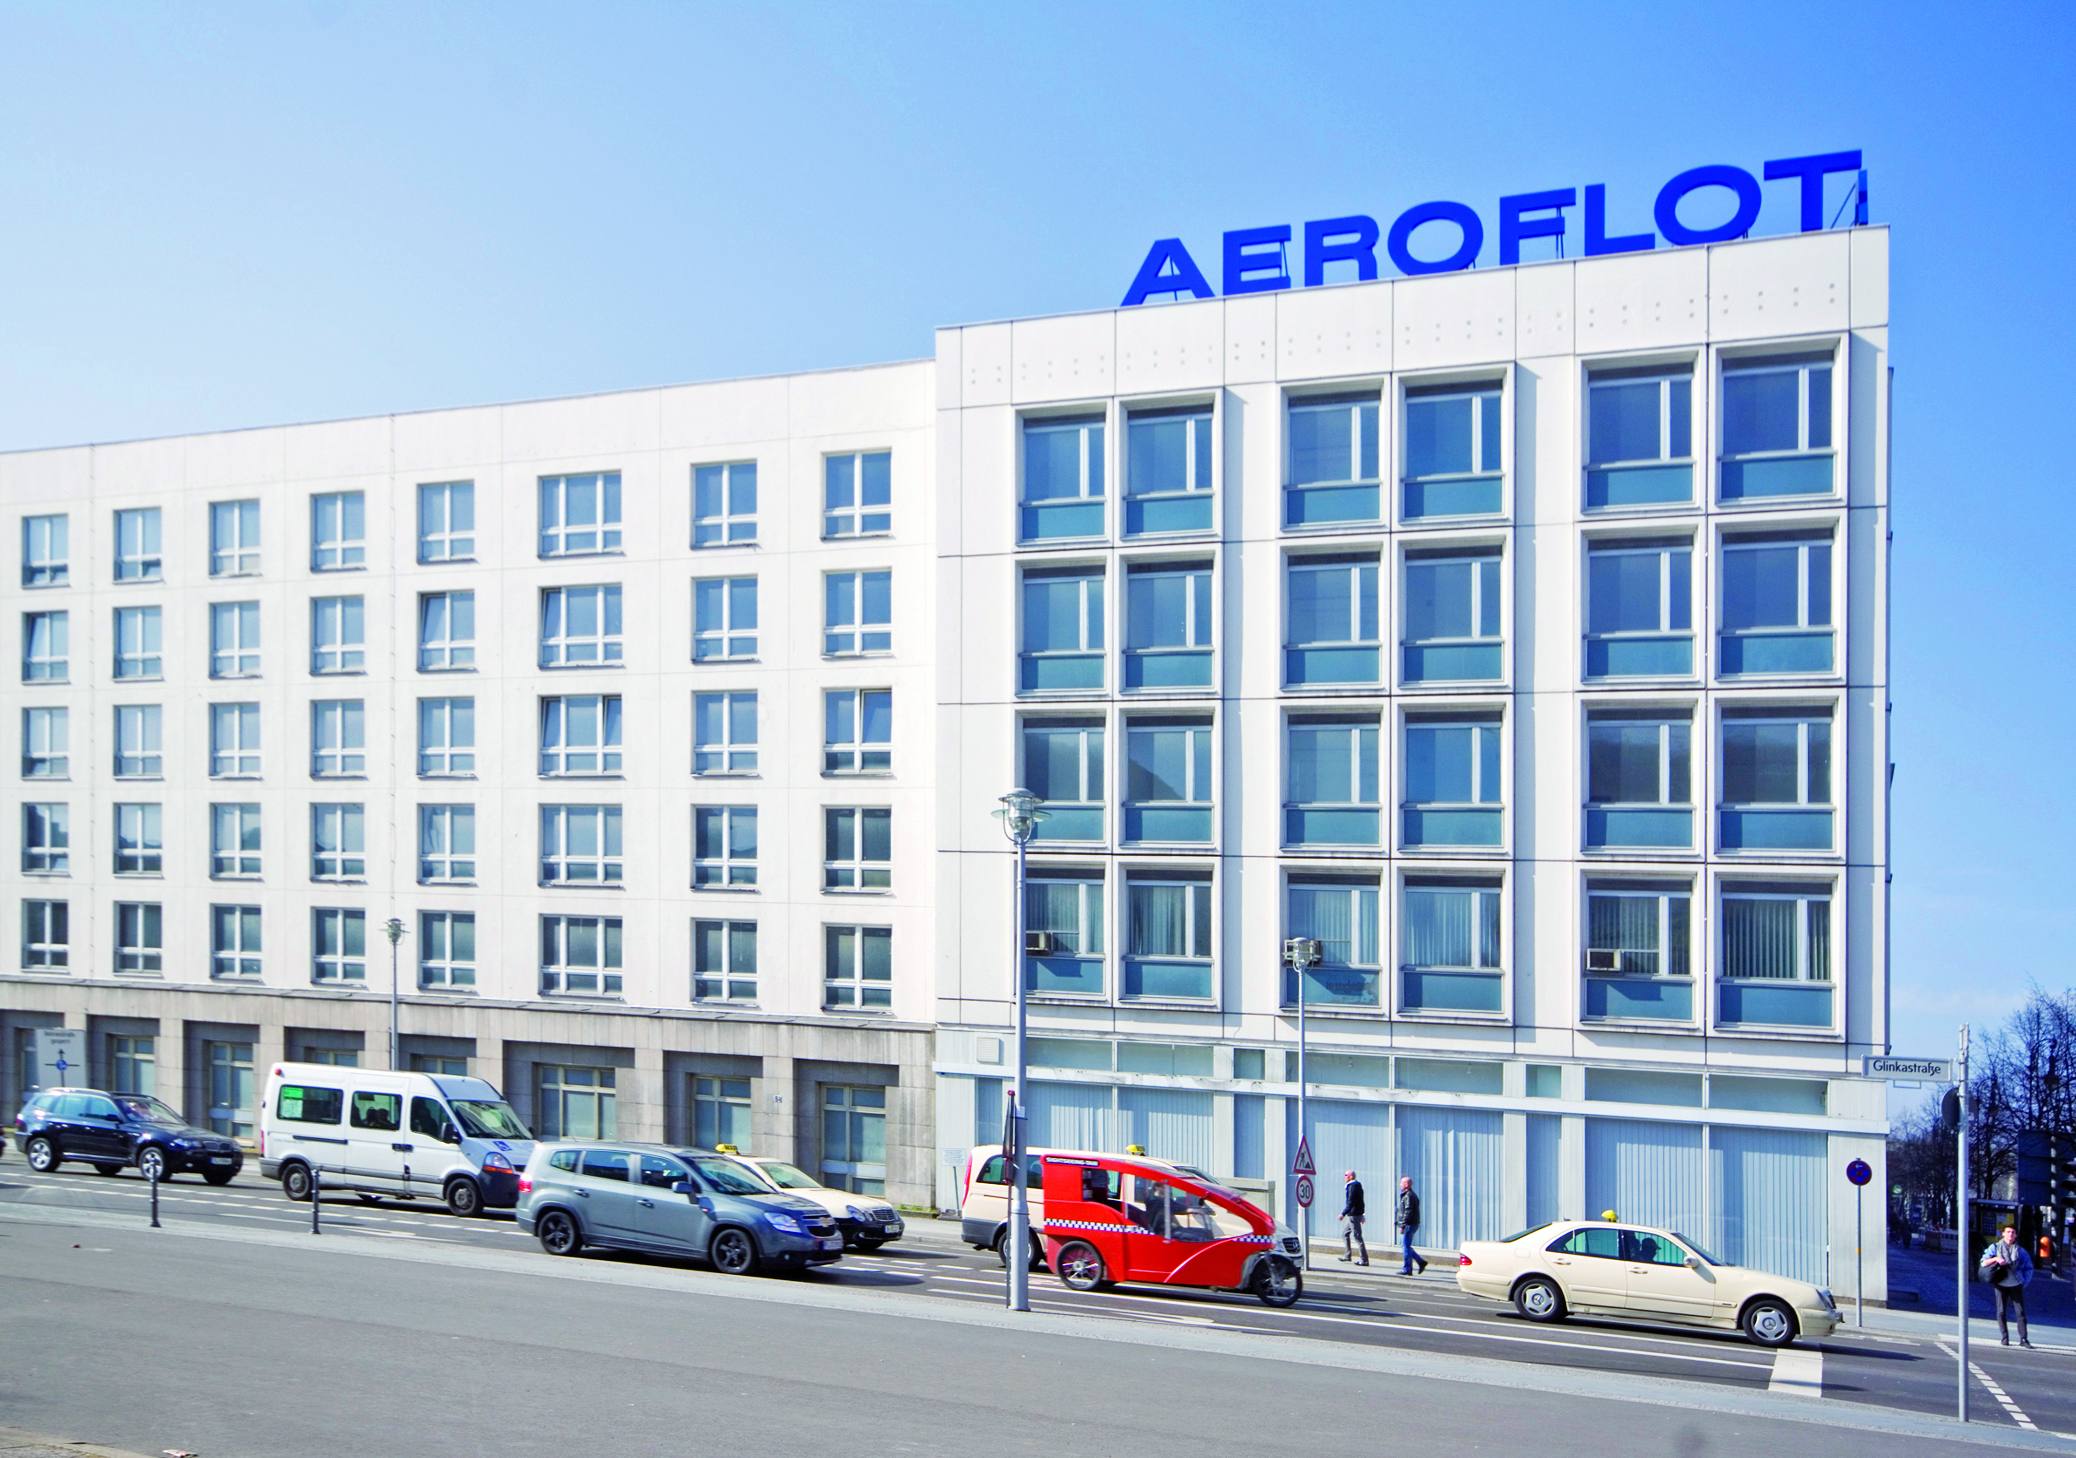 Aeroflot Airlines Office in Ussuriysk, Russia 